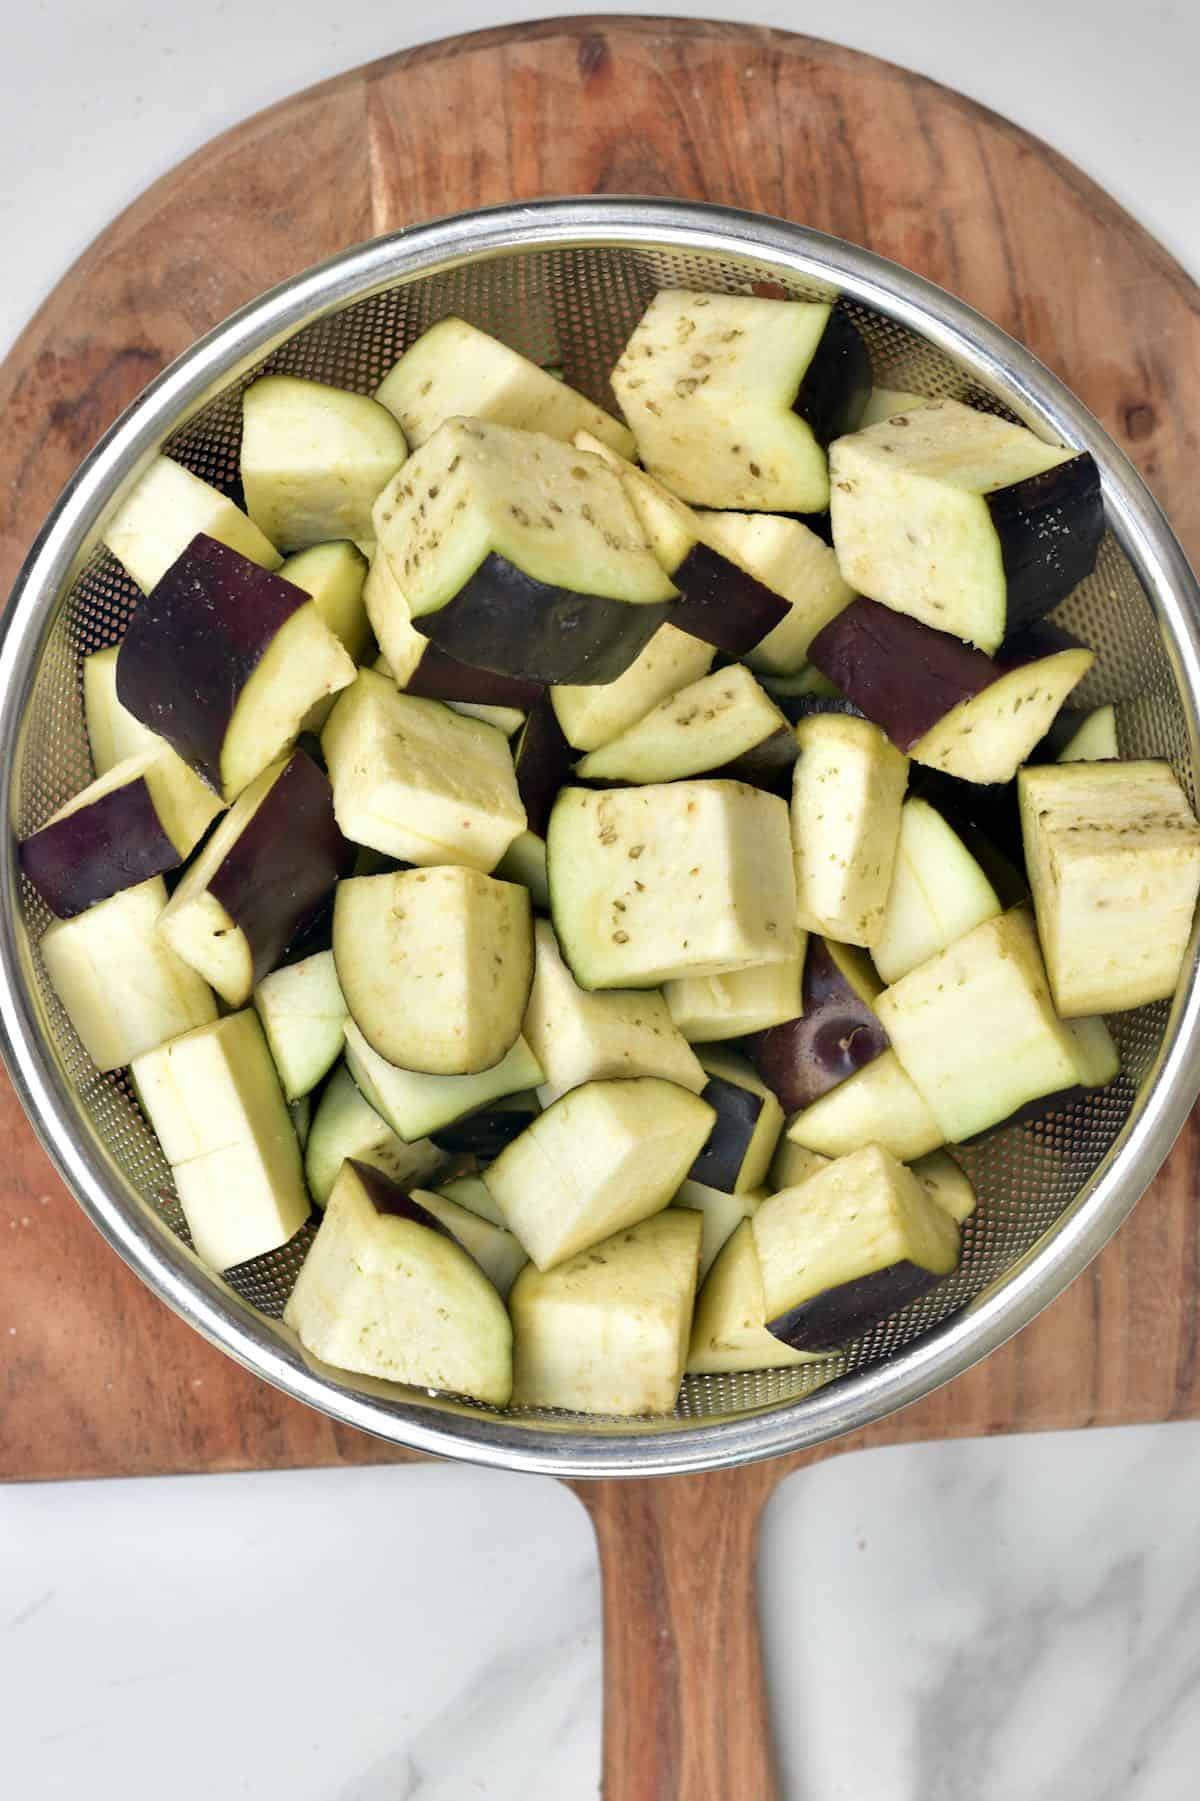 Chopped eggplant in a bowl